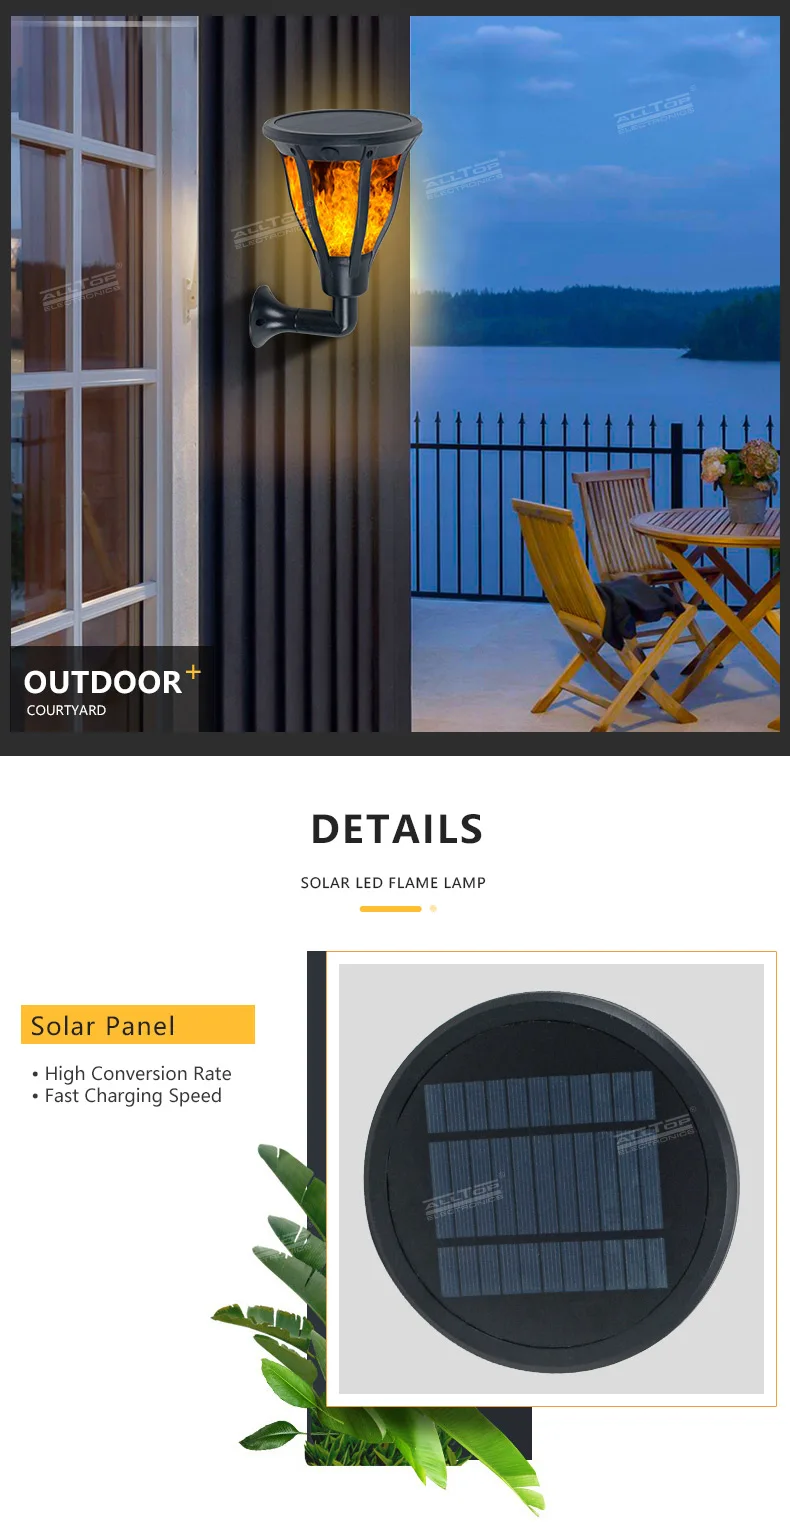 ALLTOP High quality ABS housing outdoor park raod lighting 2w ip65 flame led solar garden light